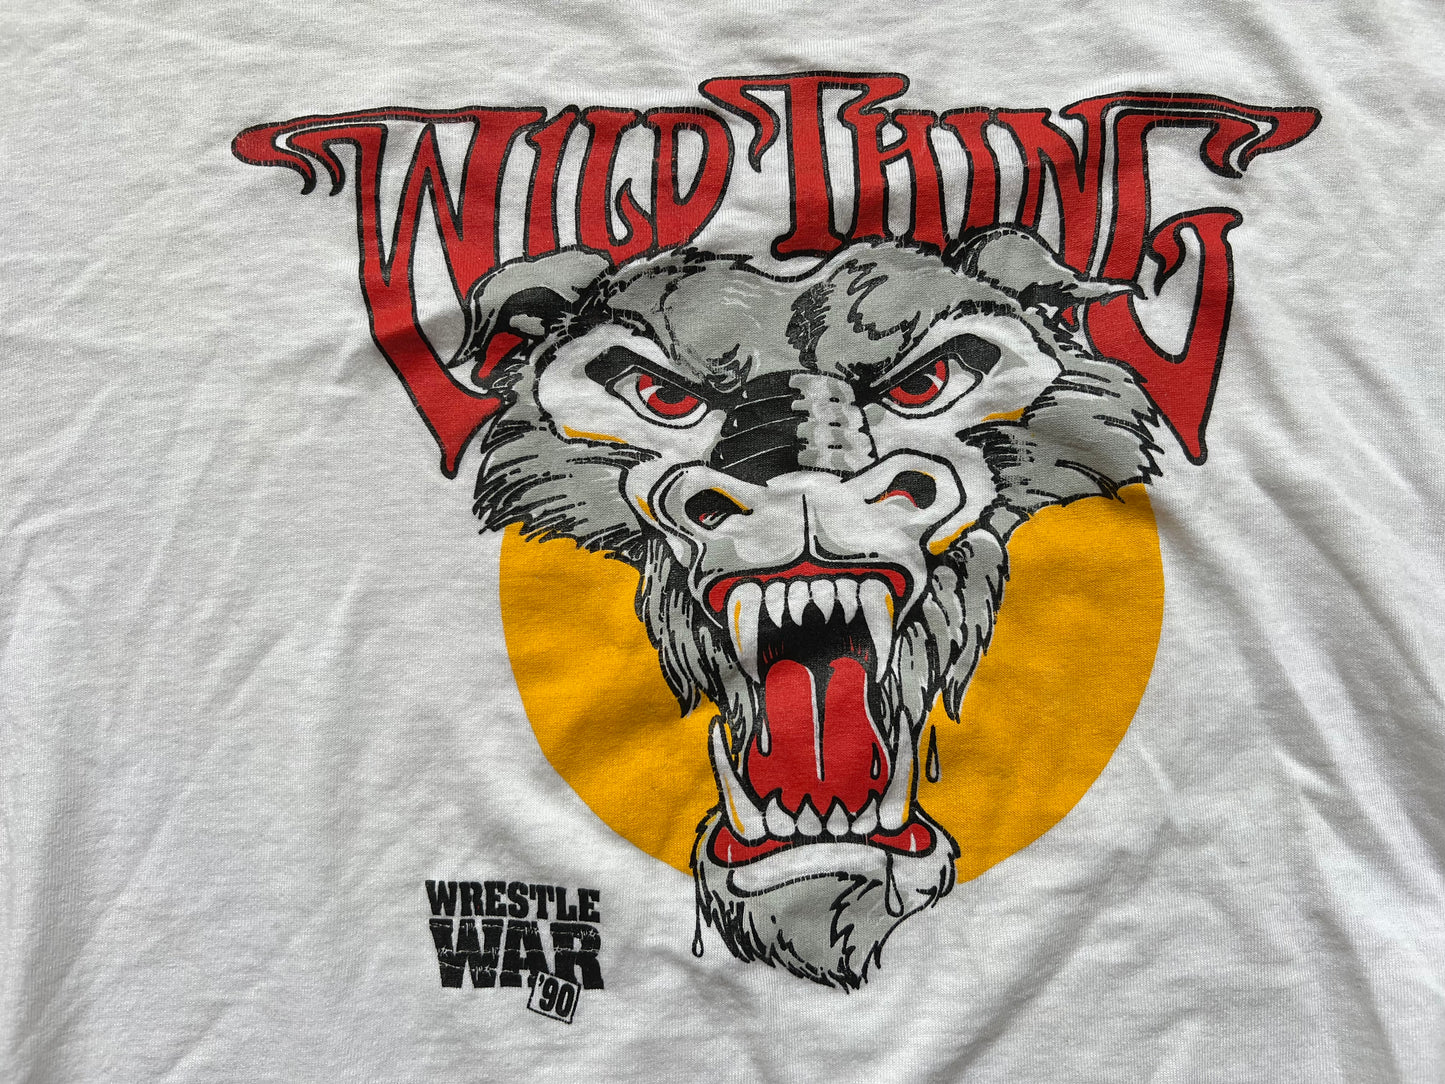 1990 WCW WrestleWar “Wild Thing” shirt